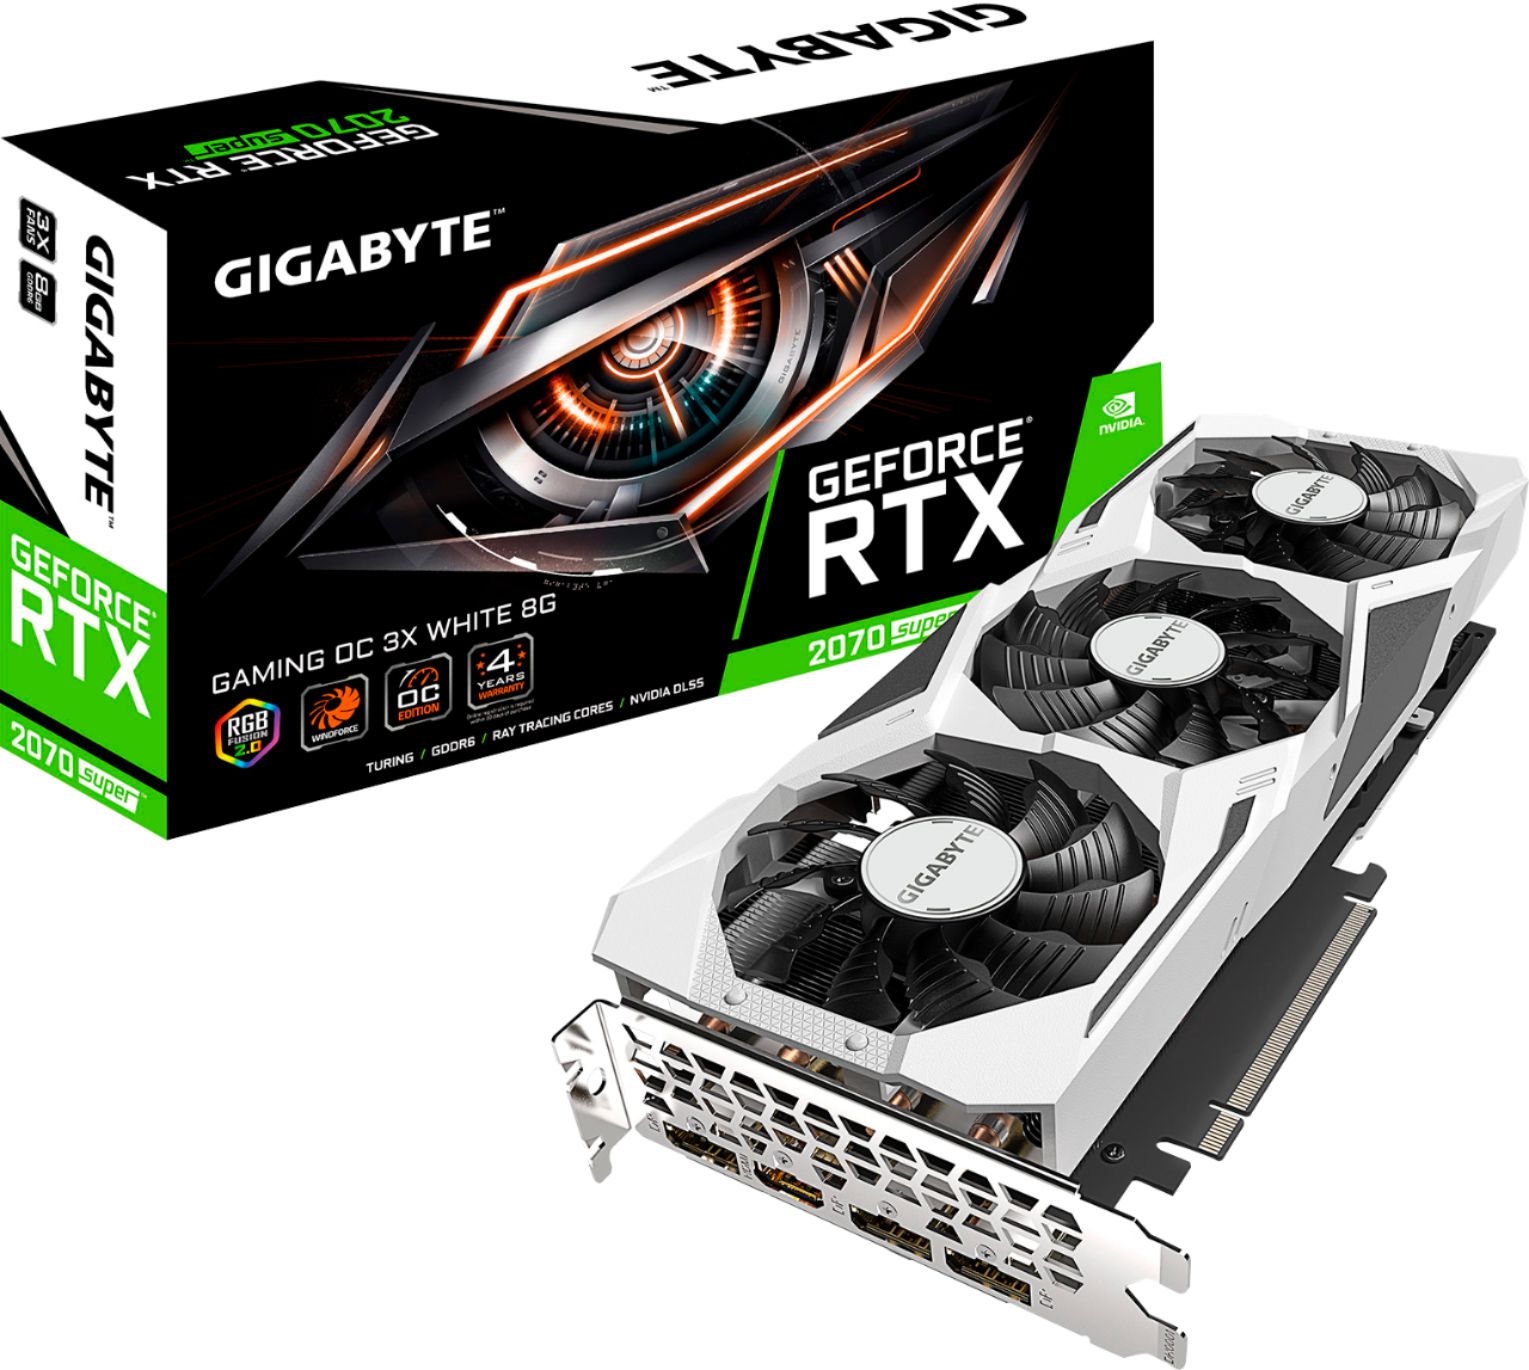 GIGABYTE NVIDIA GeForce RTX 2070 SUPER GAMING OC 3X GDDR6 PCI Express 3.0 Graphics Card White GV-N207SGAMINGOC WHITE-8GD Best Buy